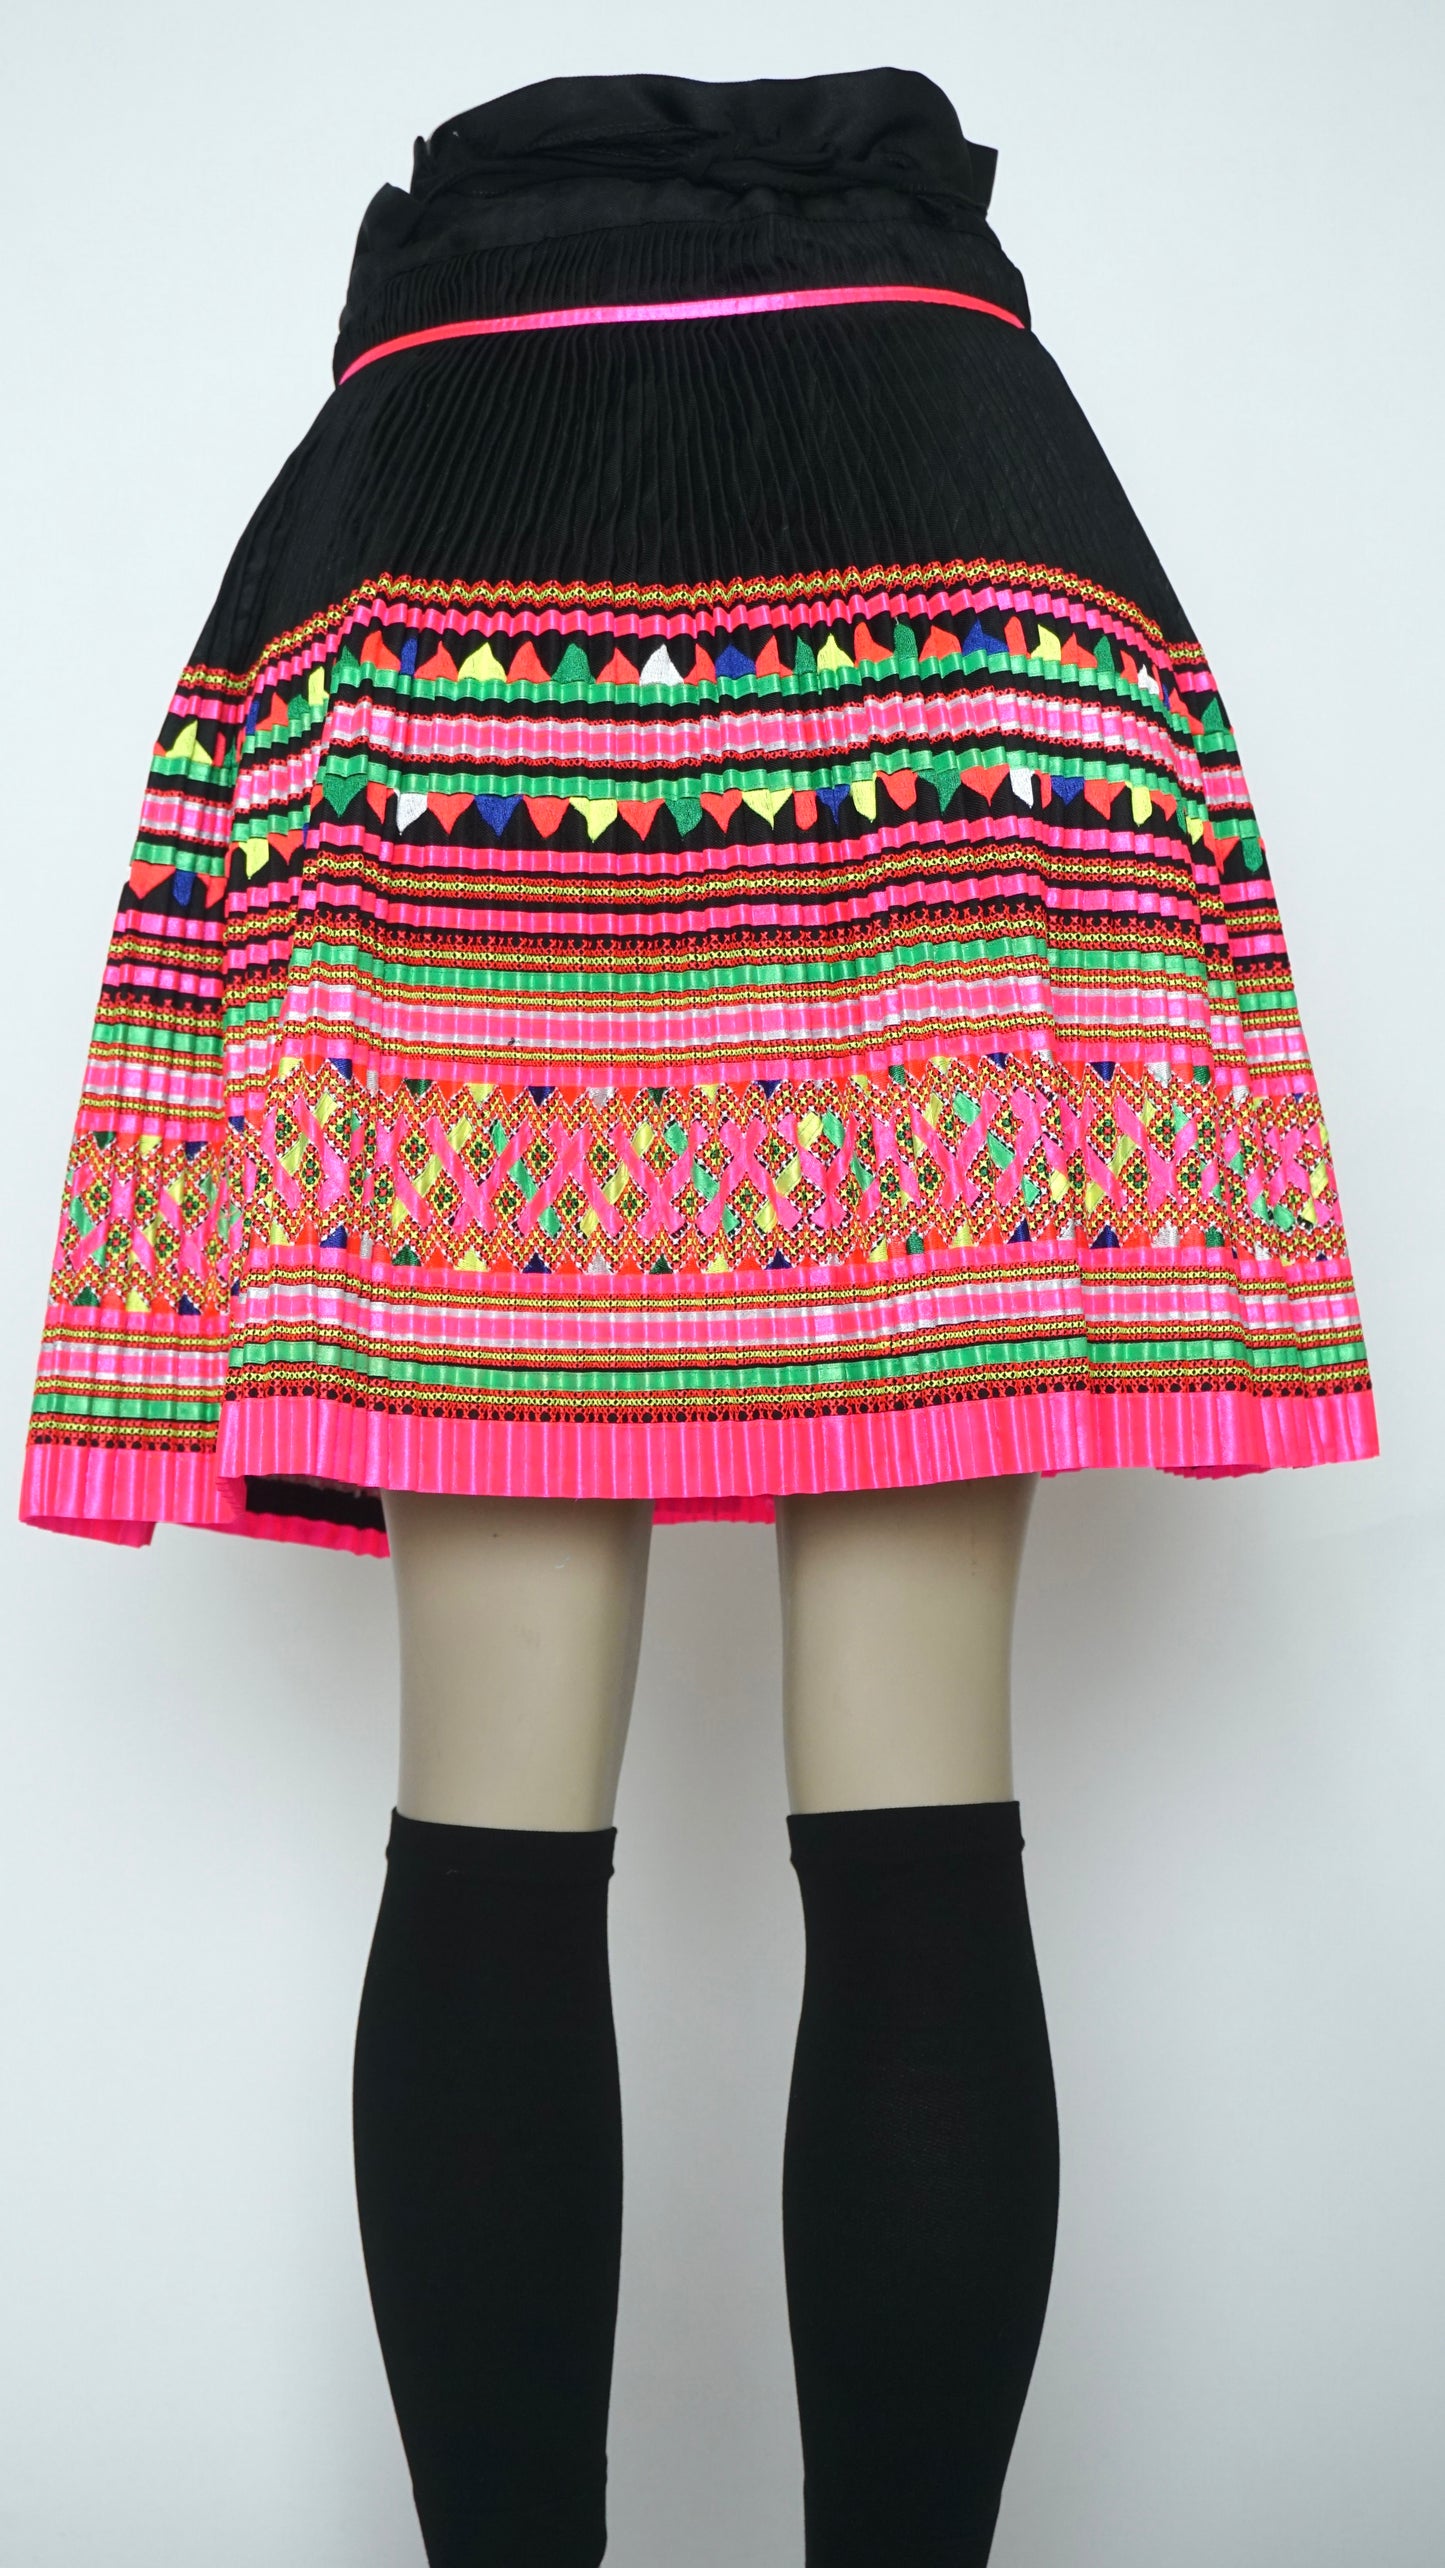 Handmade Stitched Skirt (42x21.5)